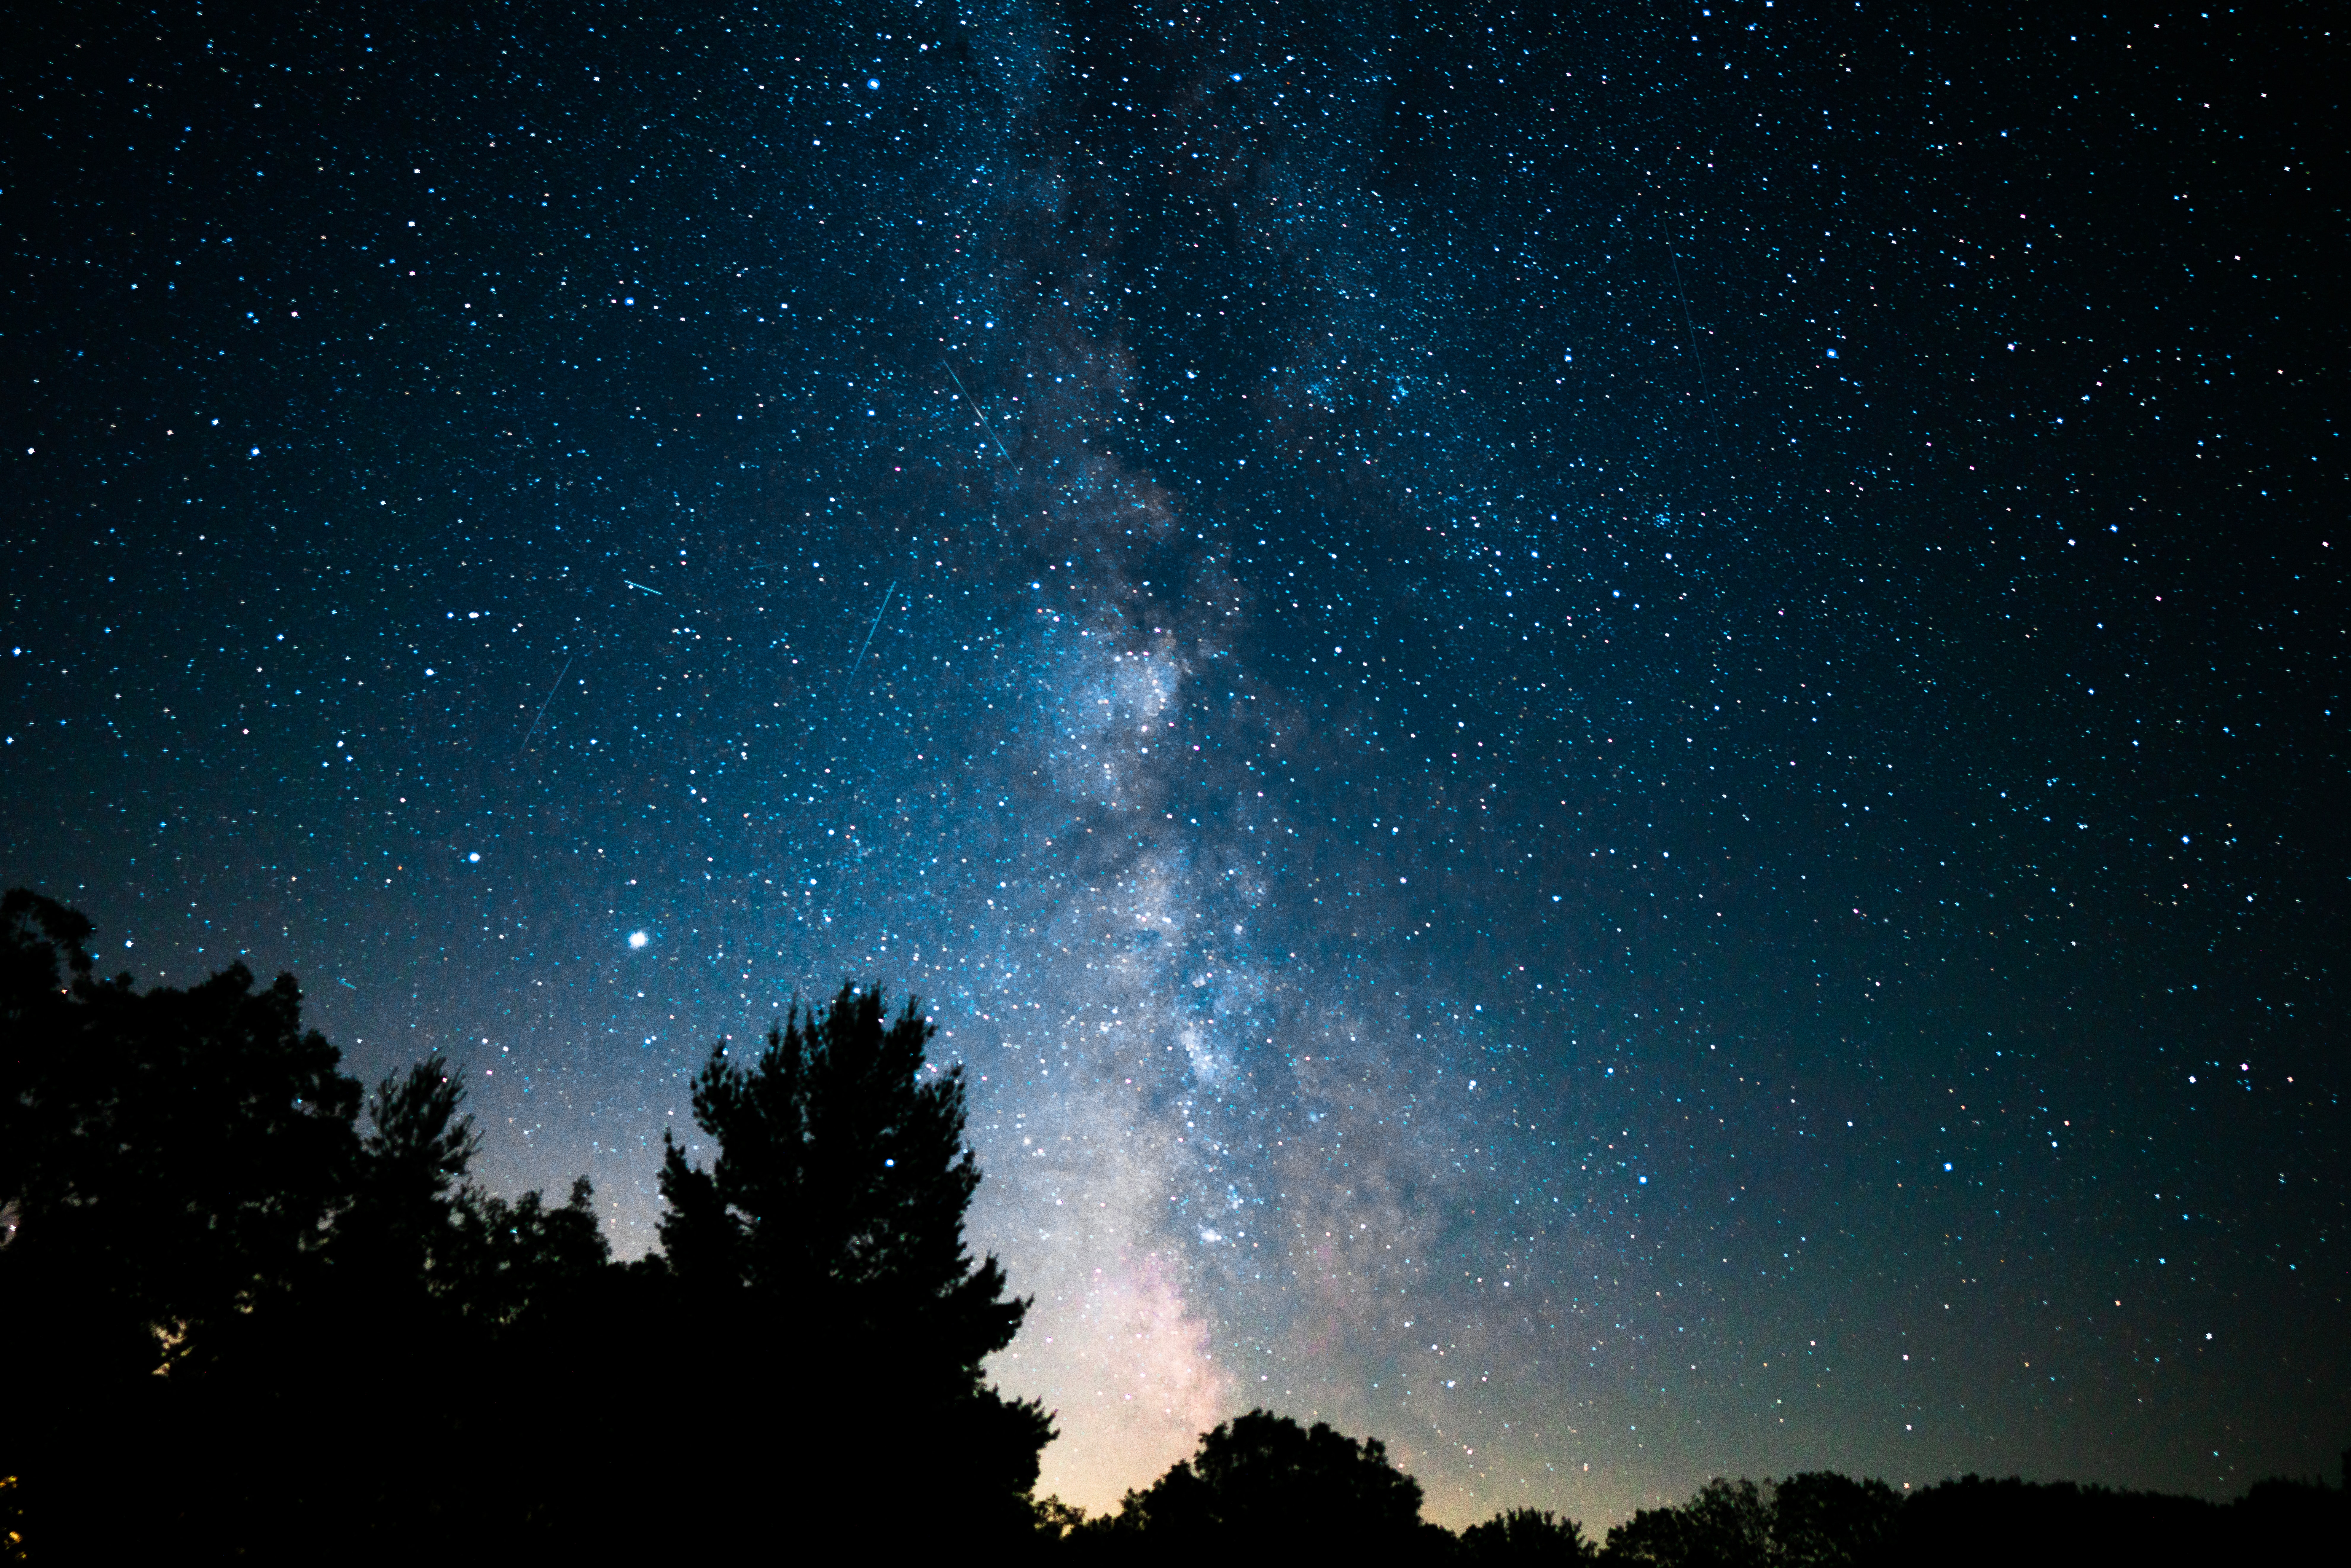 Просто звездное небо. Ночное небо. Звездное небо. Ночное небо со звездами. Ночное звездное небо.